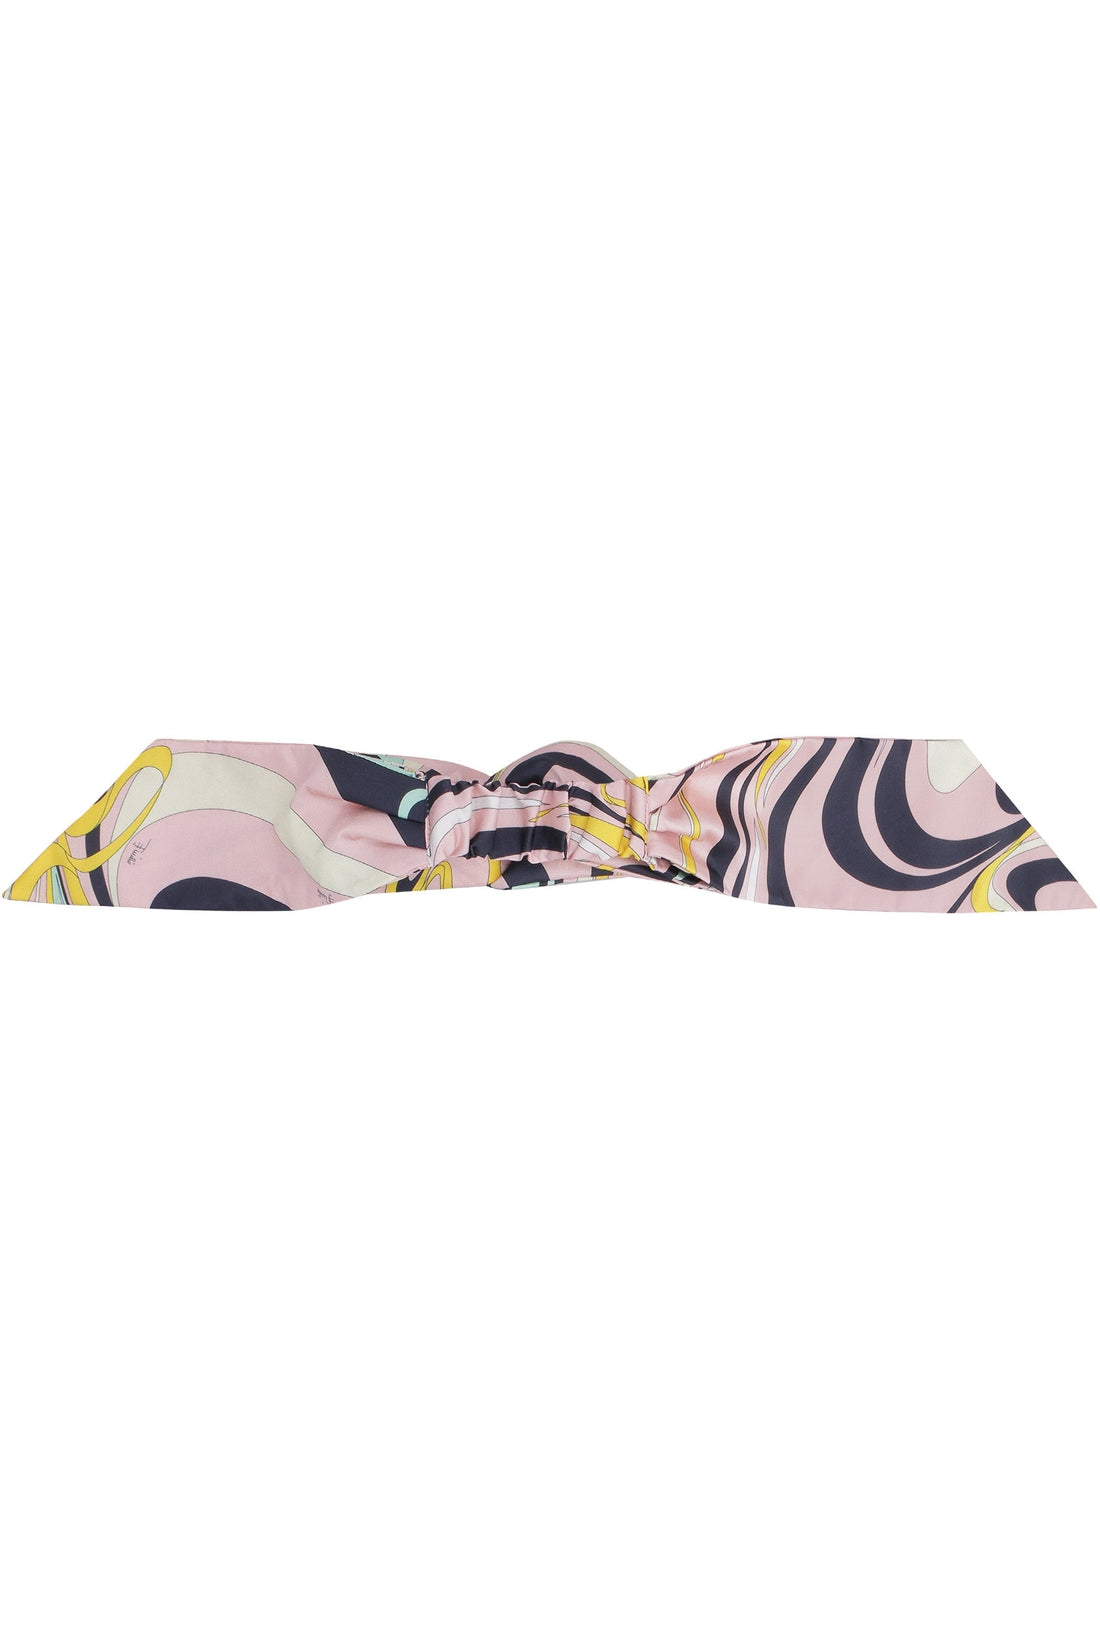 Emilio Pucci-OUTLET-SALE-Printed silk headband-ARCHIVIST